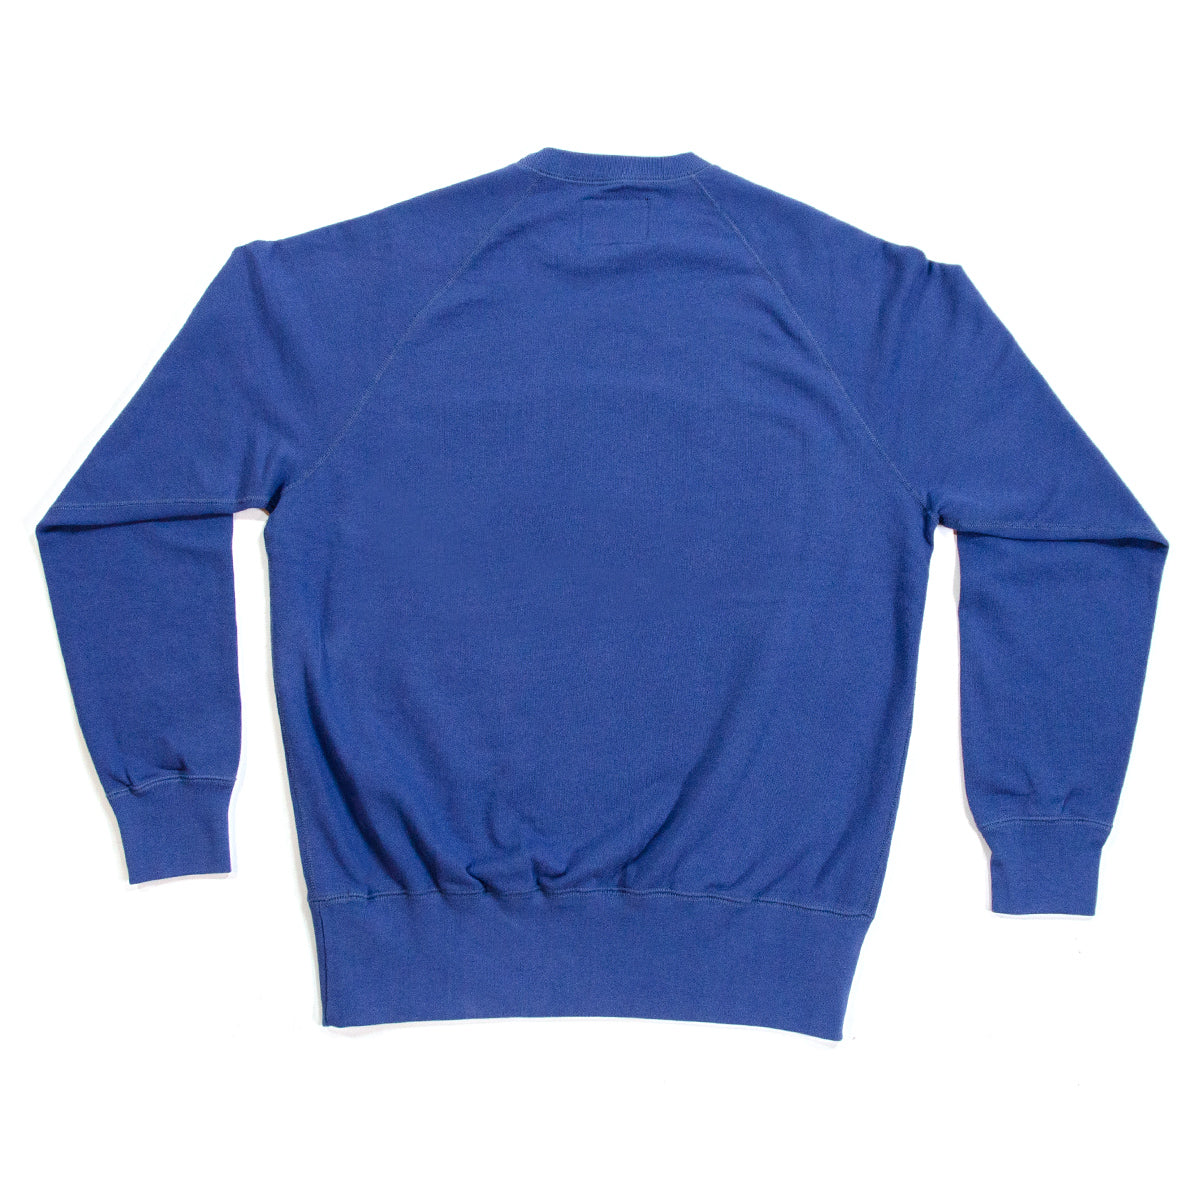 Lost Art Canada - blue lost art class crewneck sweatshirt back view